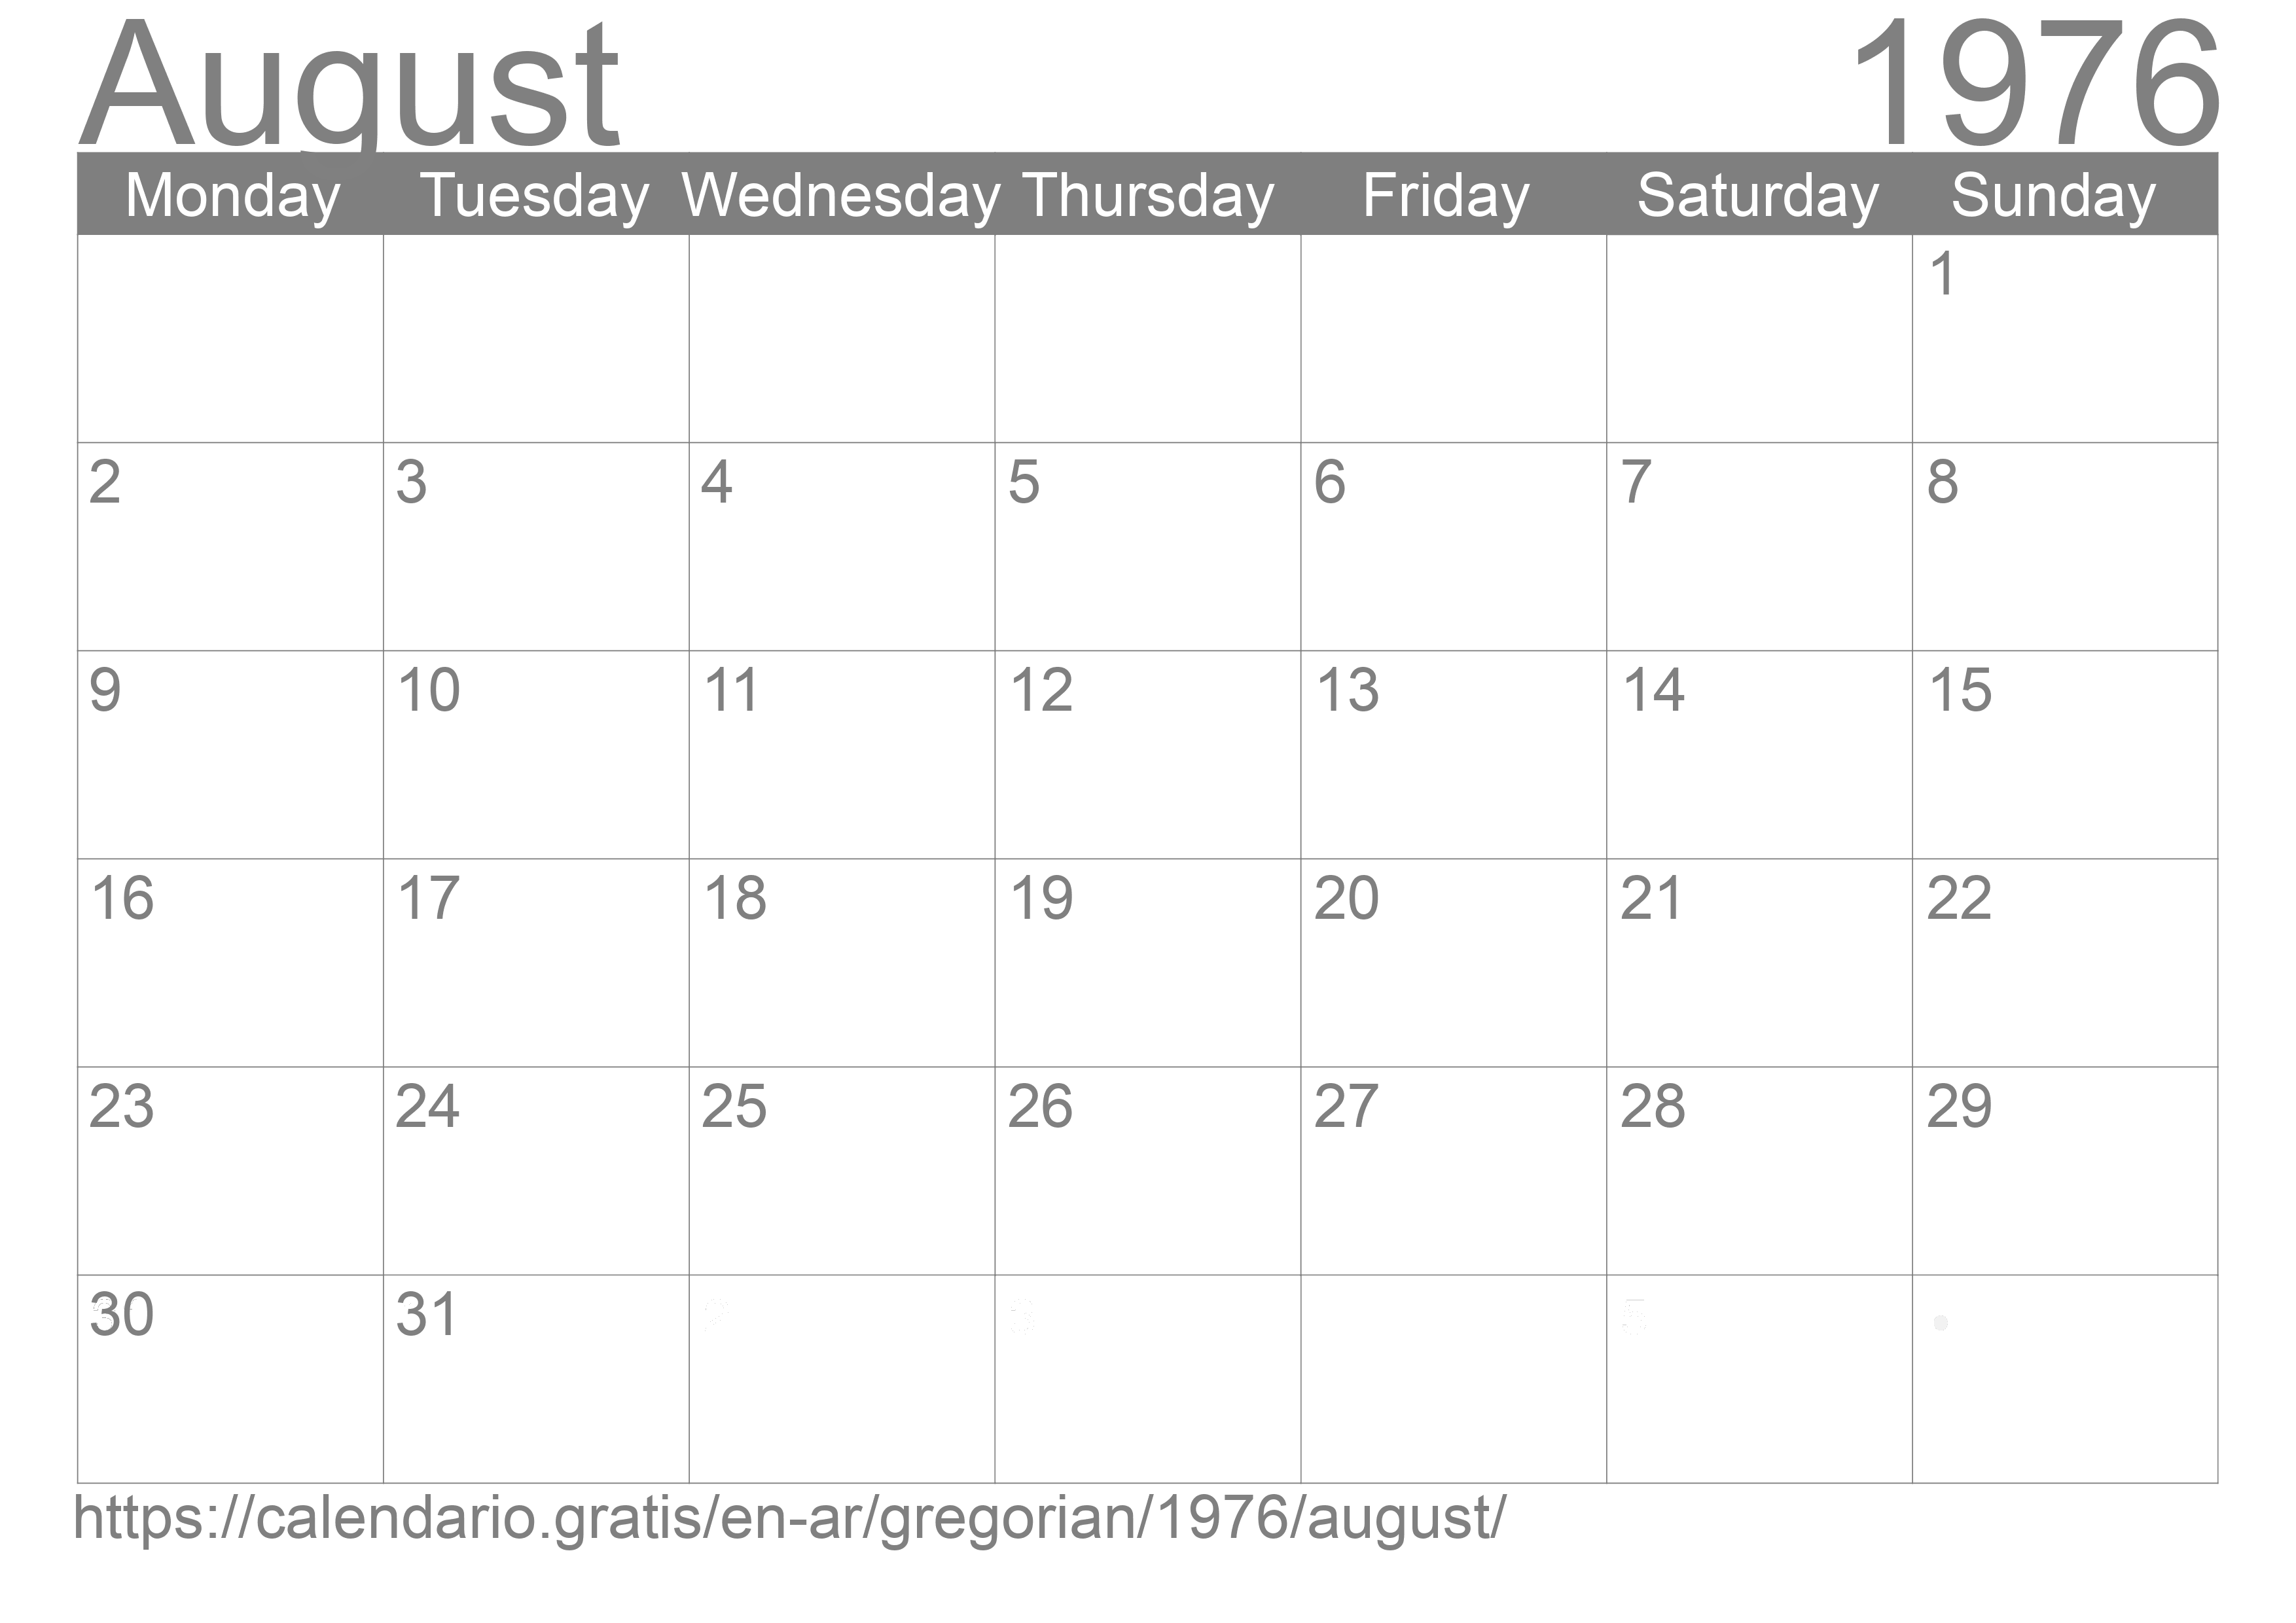 Calendar August 1976 to print